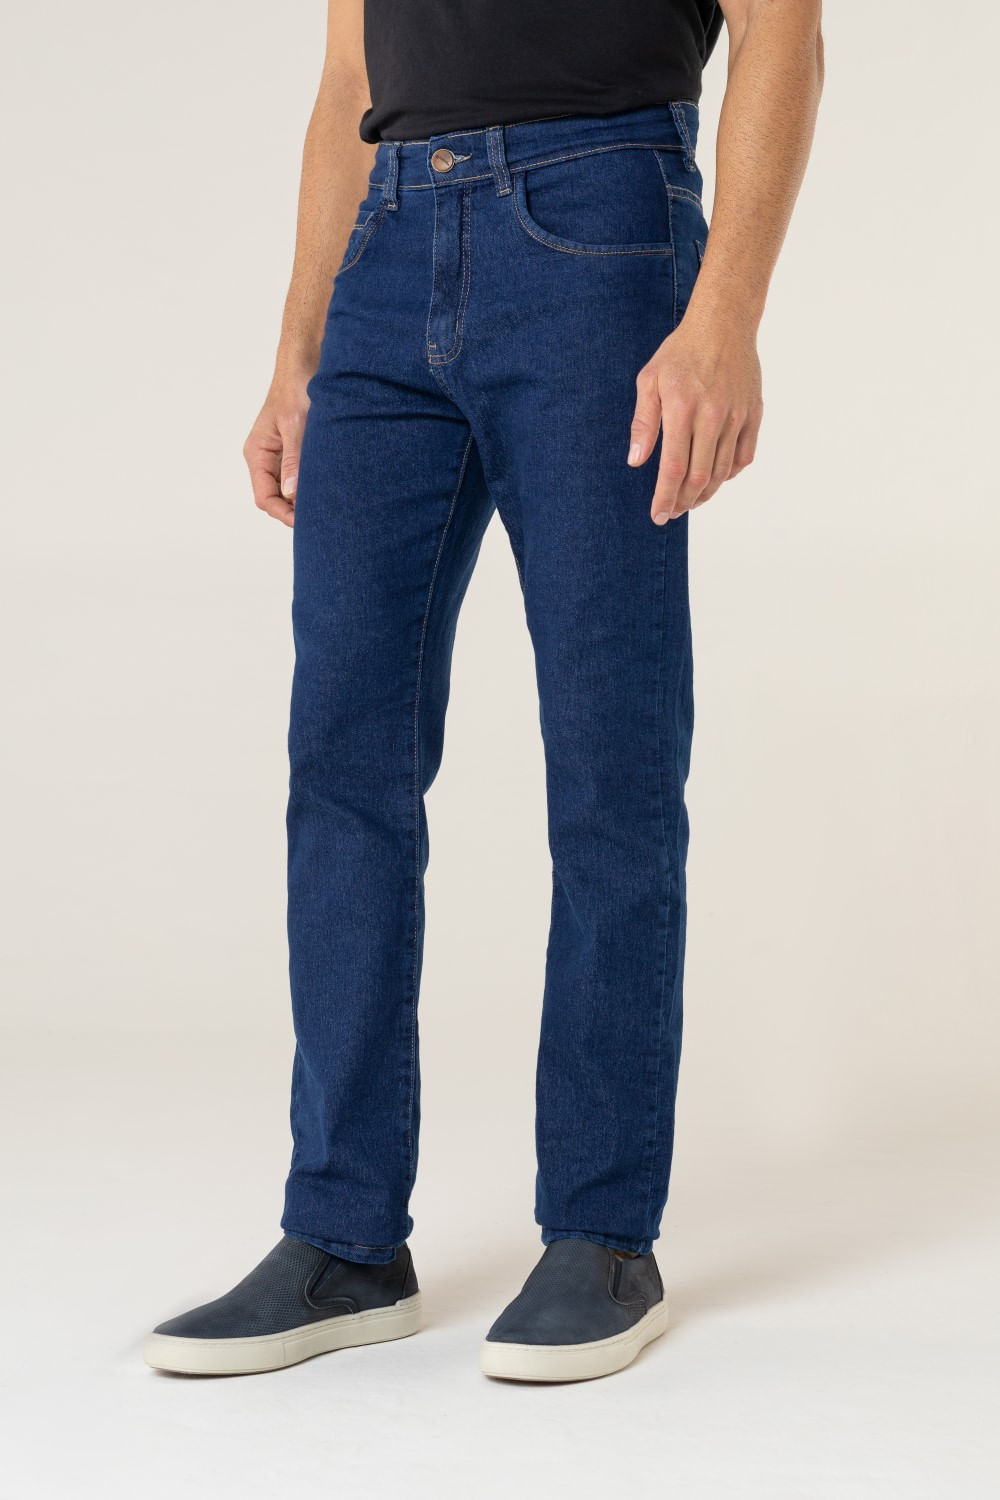 Calça Jeans Heraldo Básica Tradicional Plus Size - Lavagem Media